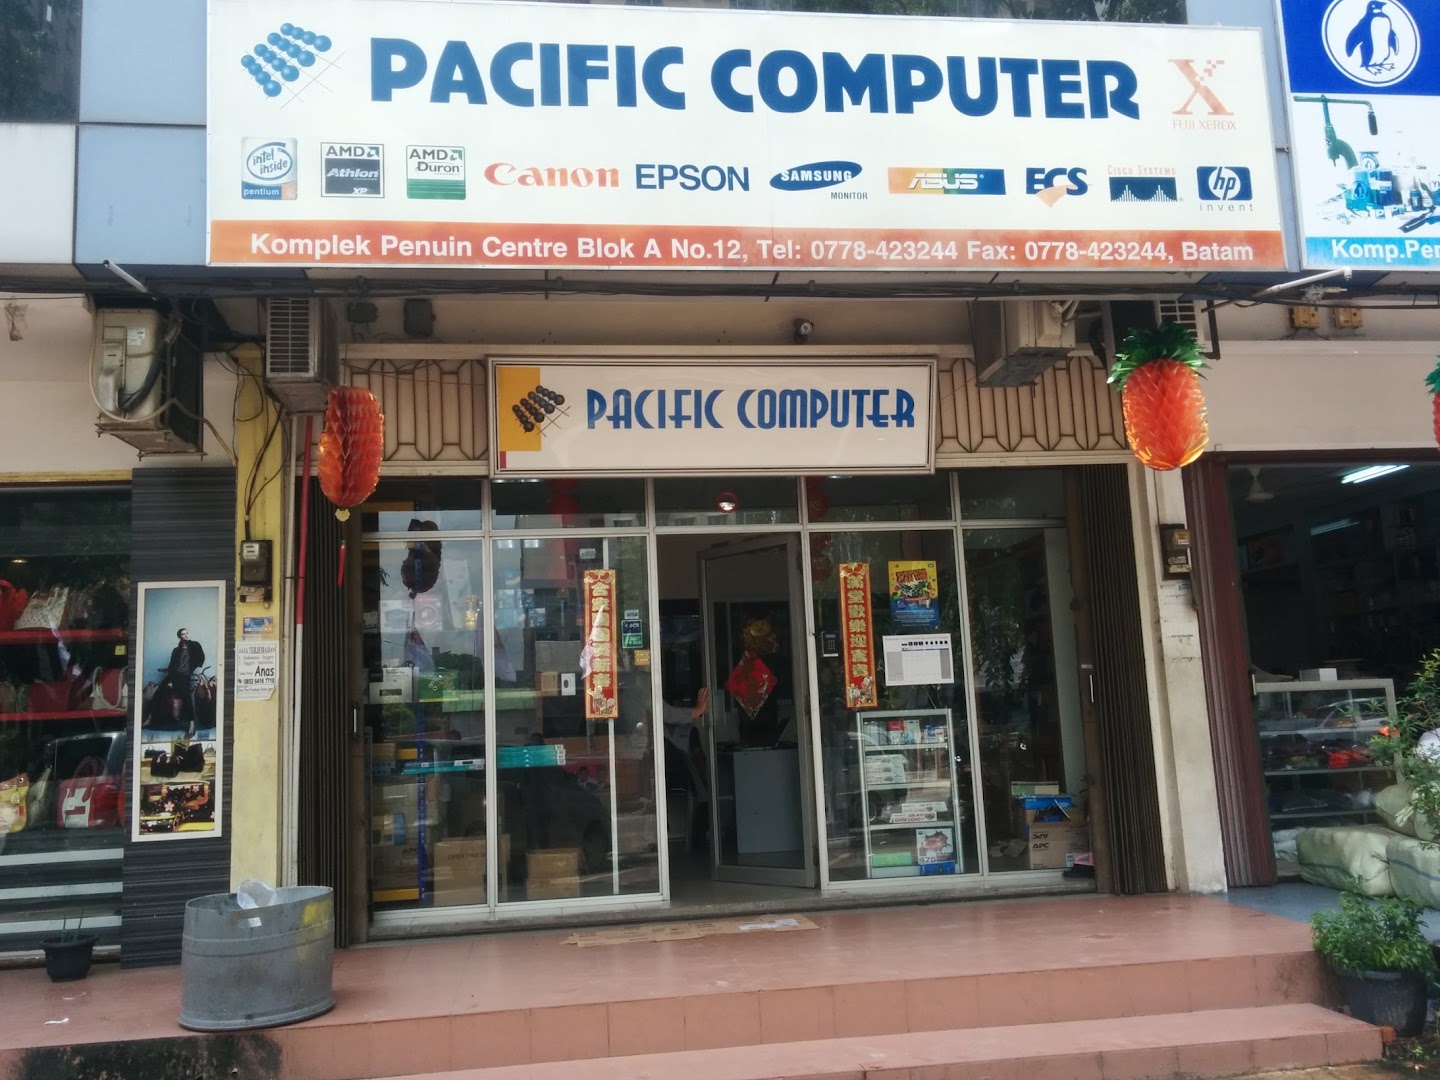 Gambar Pacific Computer